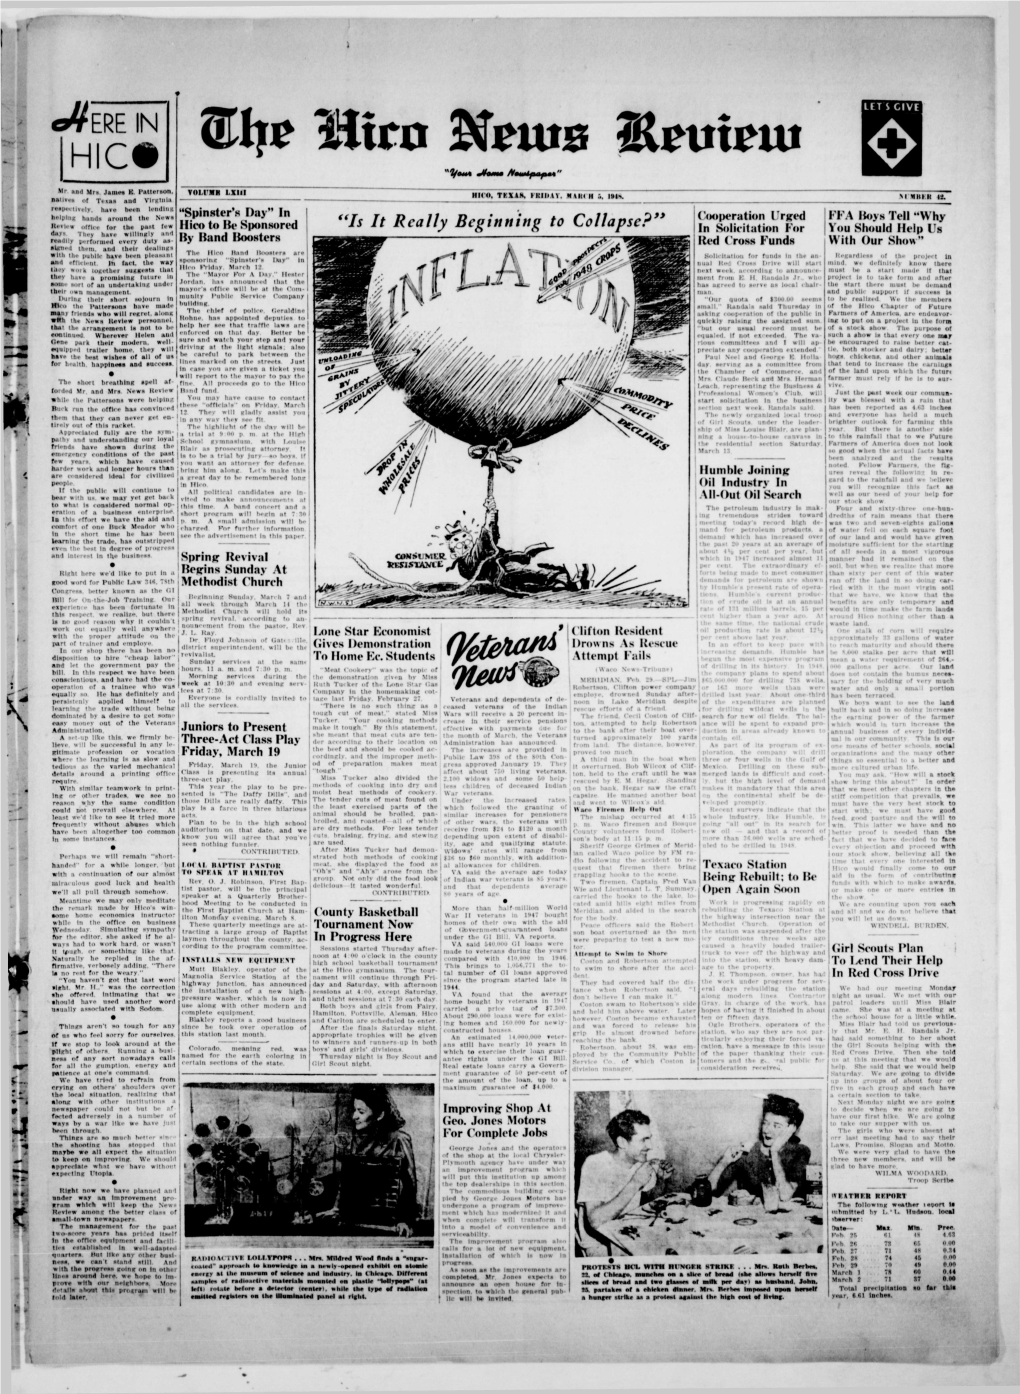 Hico News Review 1948 03 05.Pdf (14.86Mb)